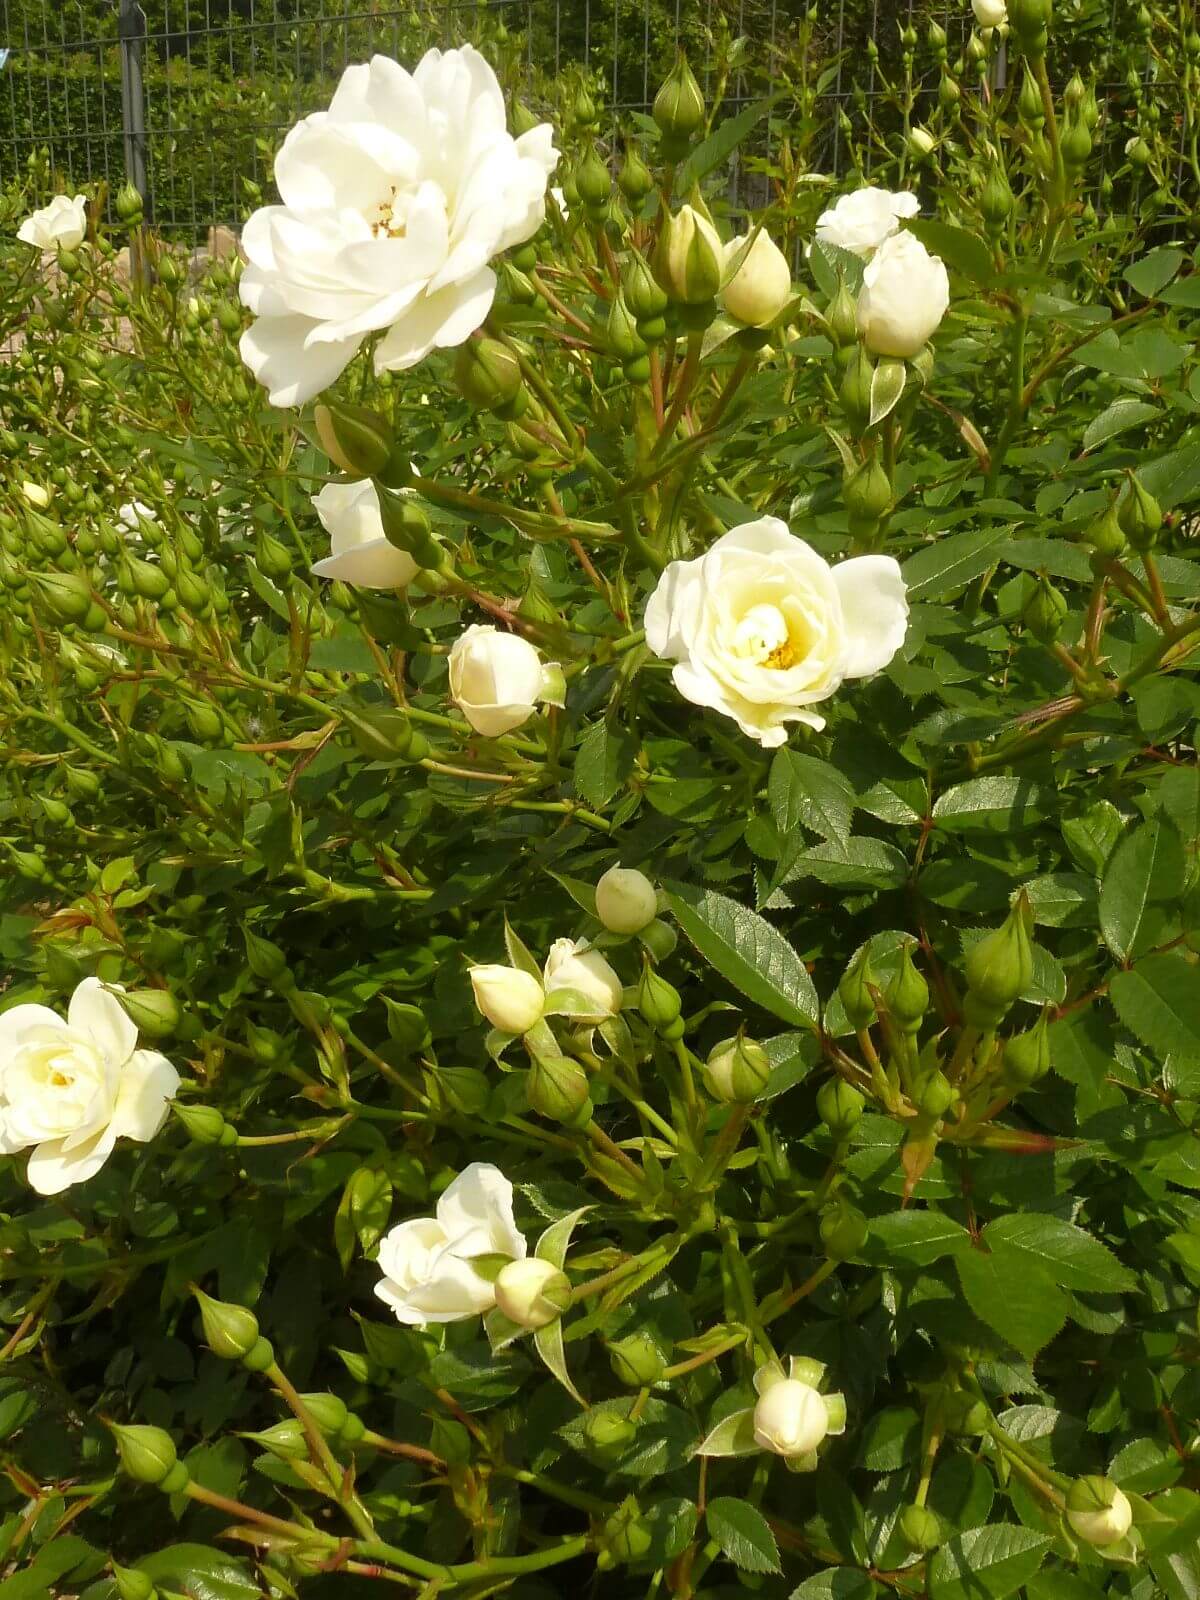 Schneewittchen роза на штамбе фото